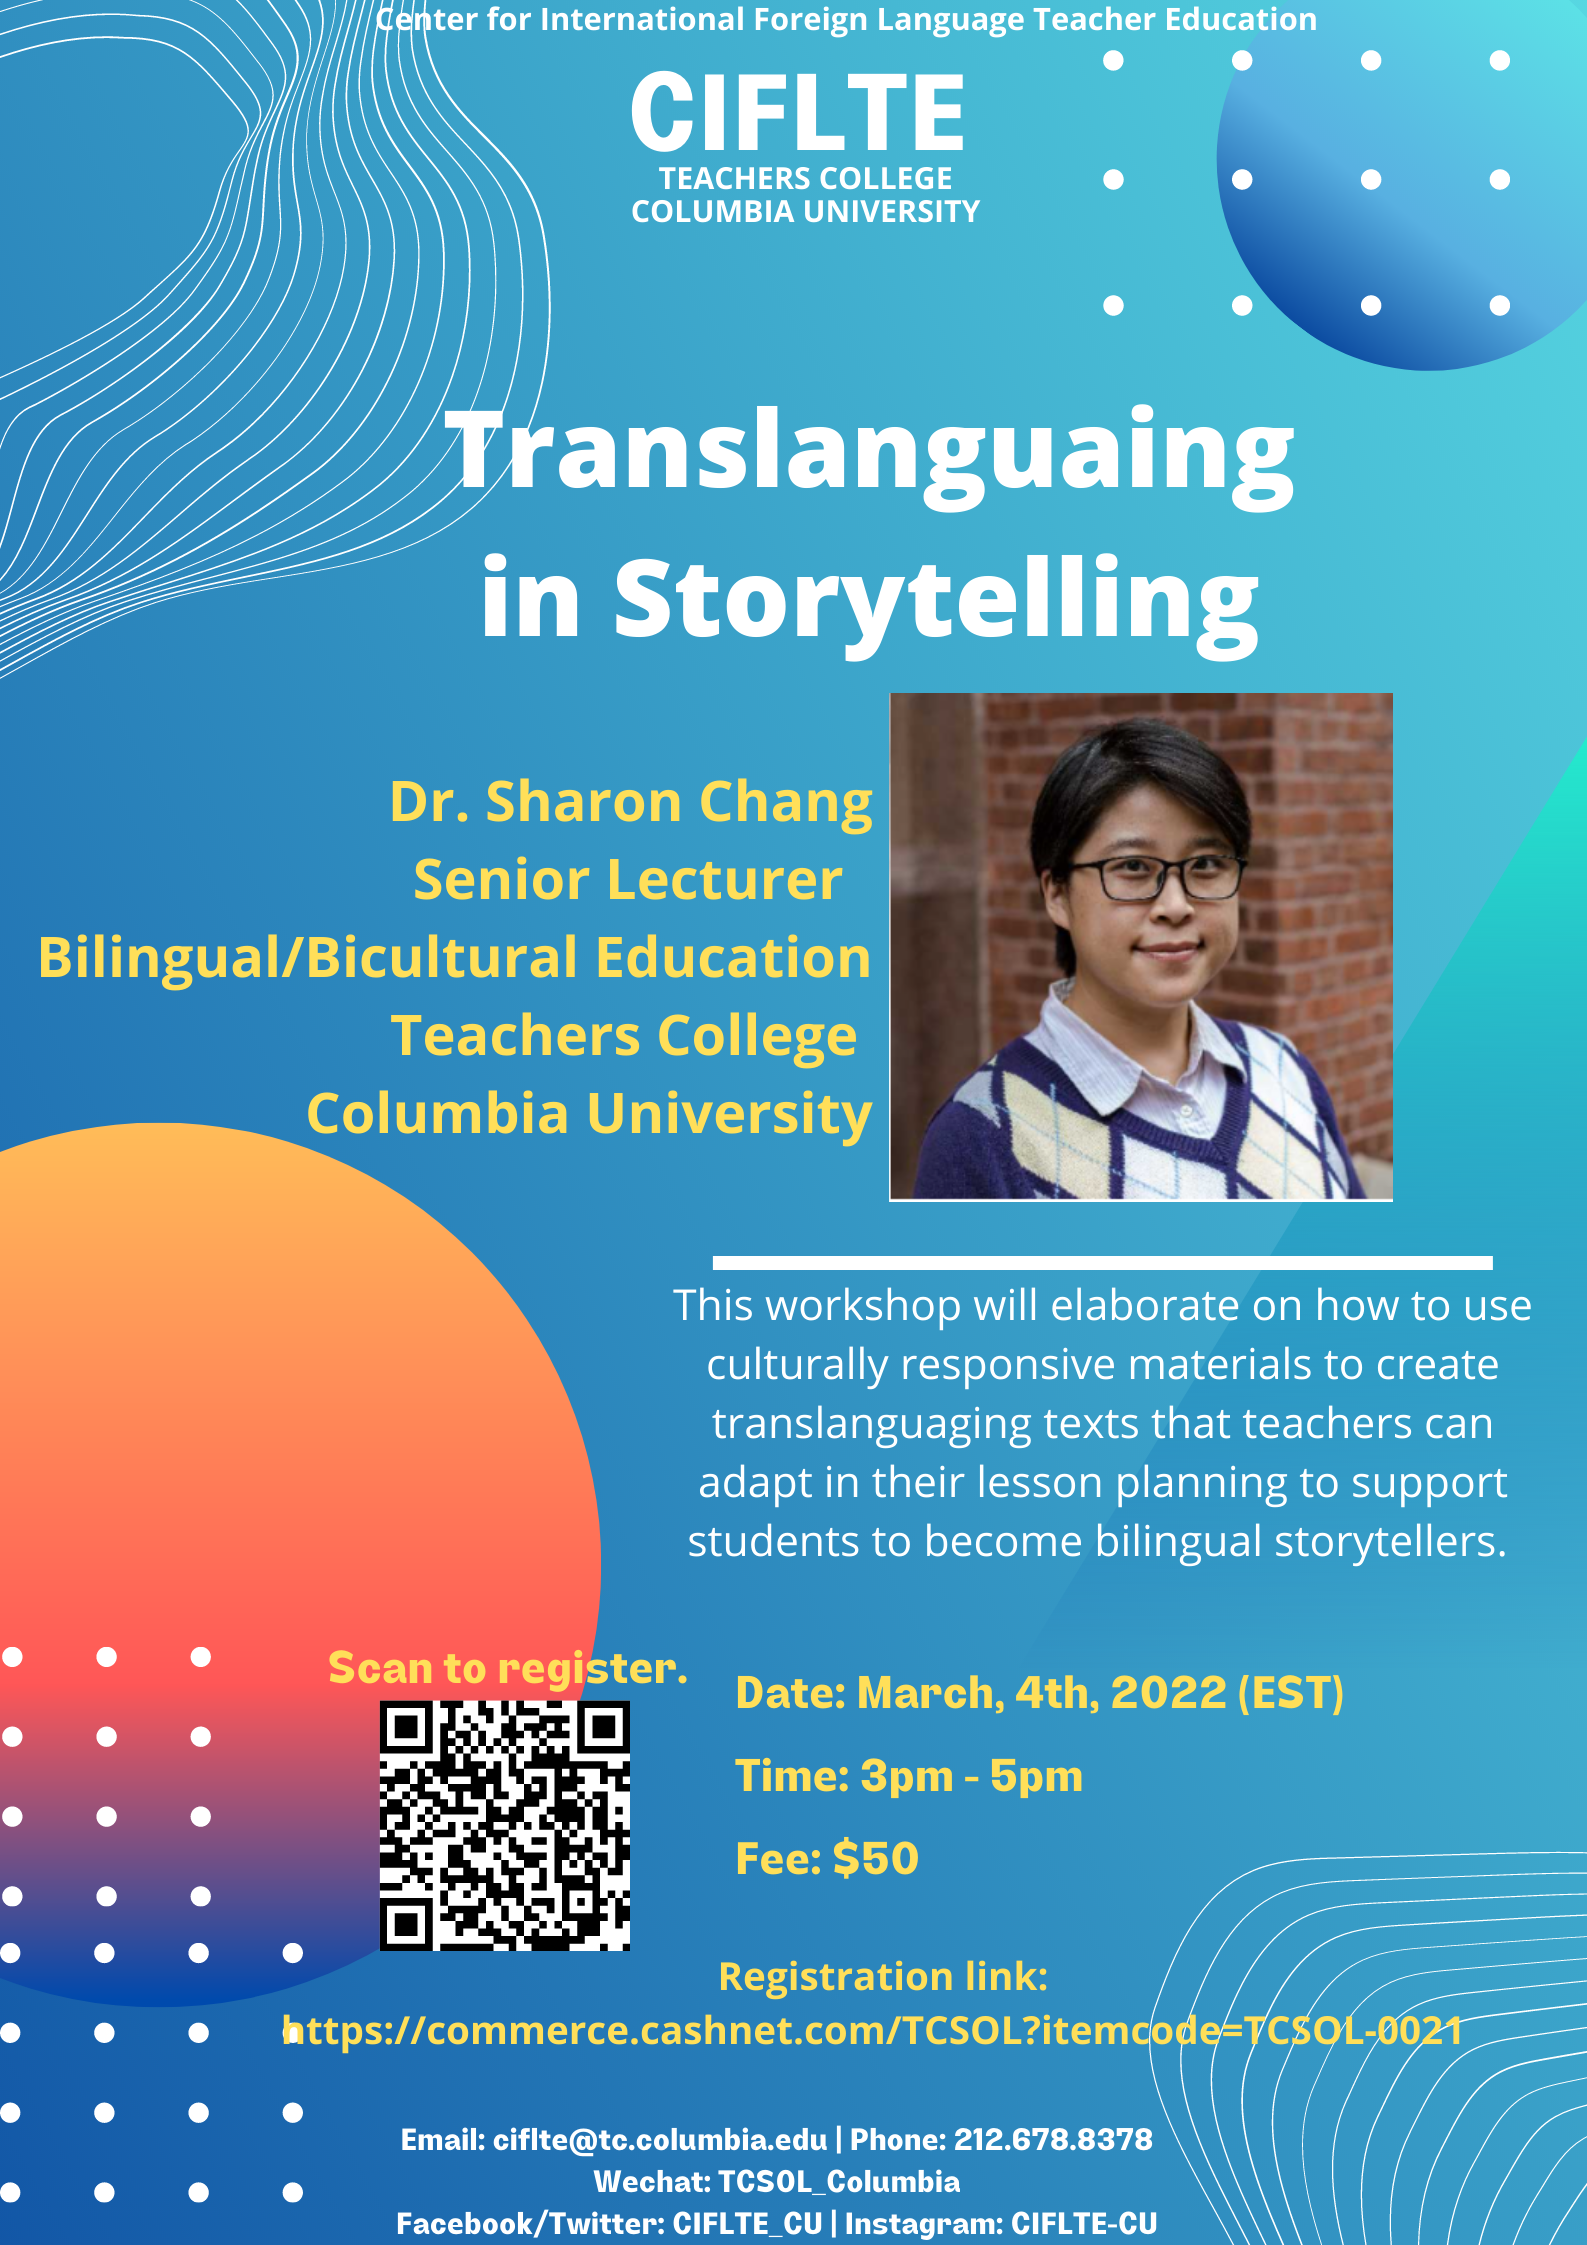 Event Flyer for CIFLTE Workshop: Translanguaging in Storytelling; For more details, refer to the event descriptions below.